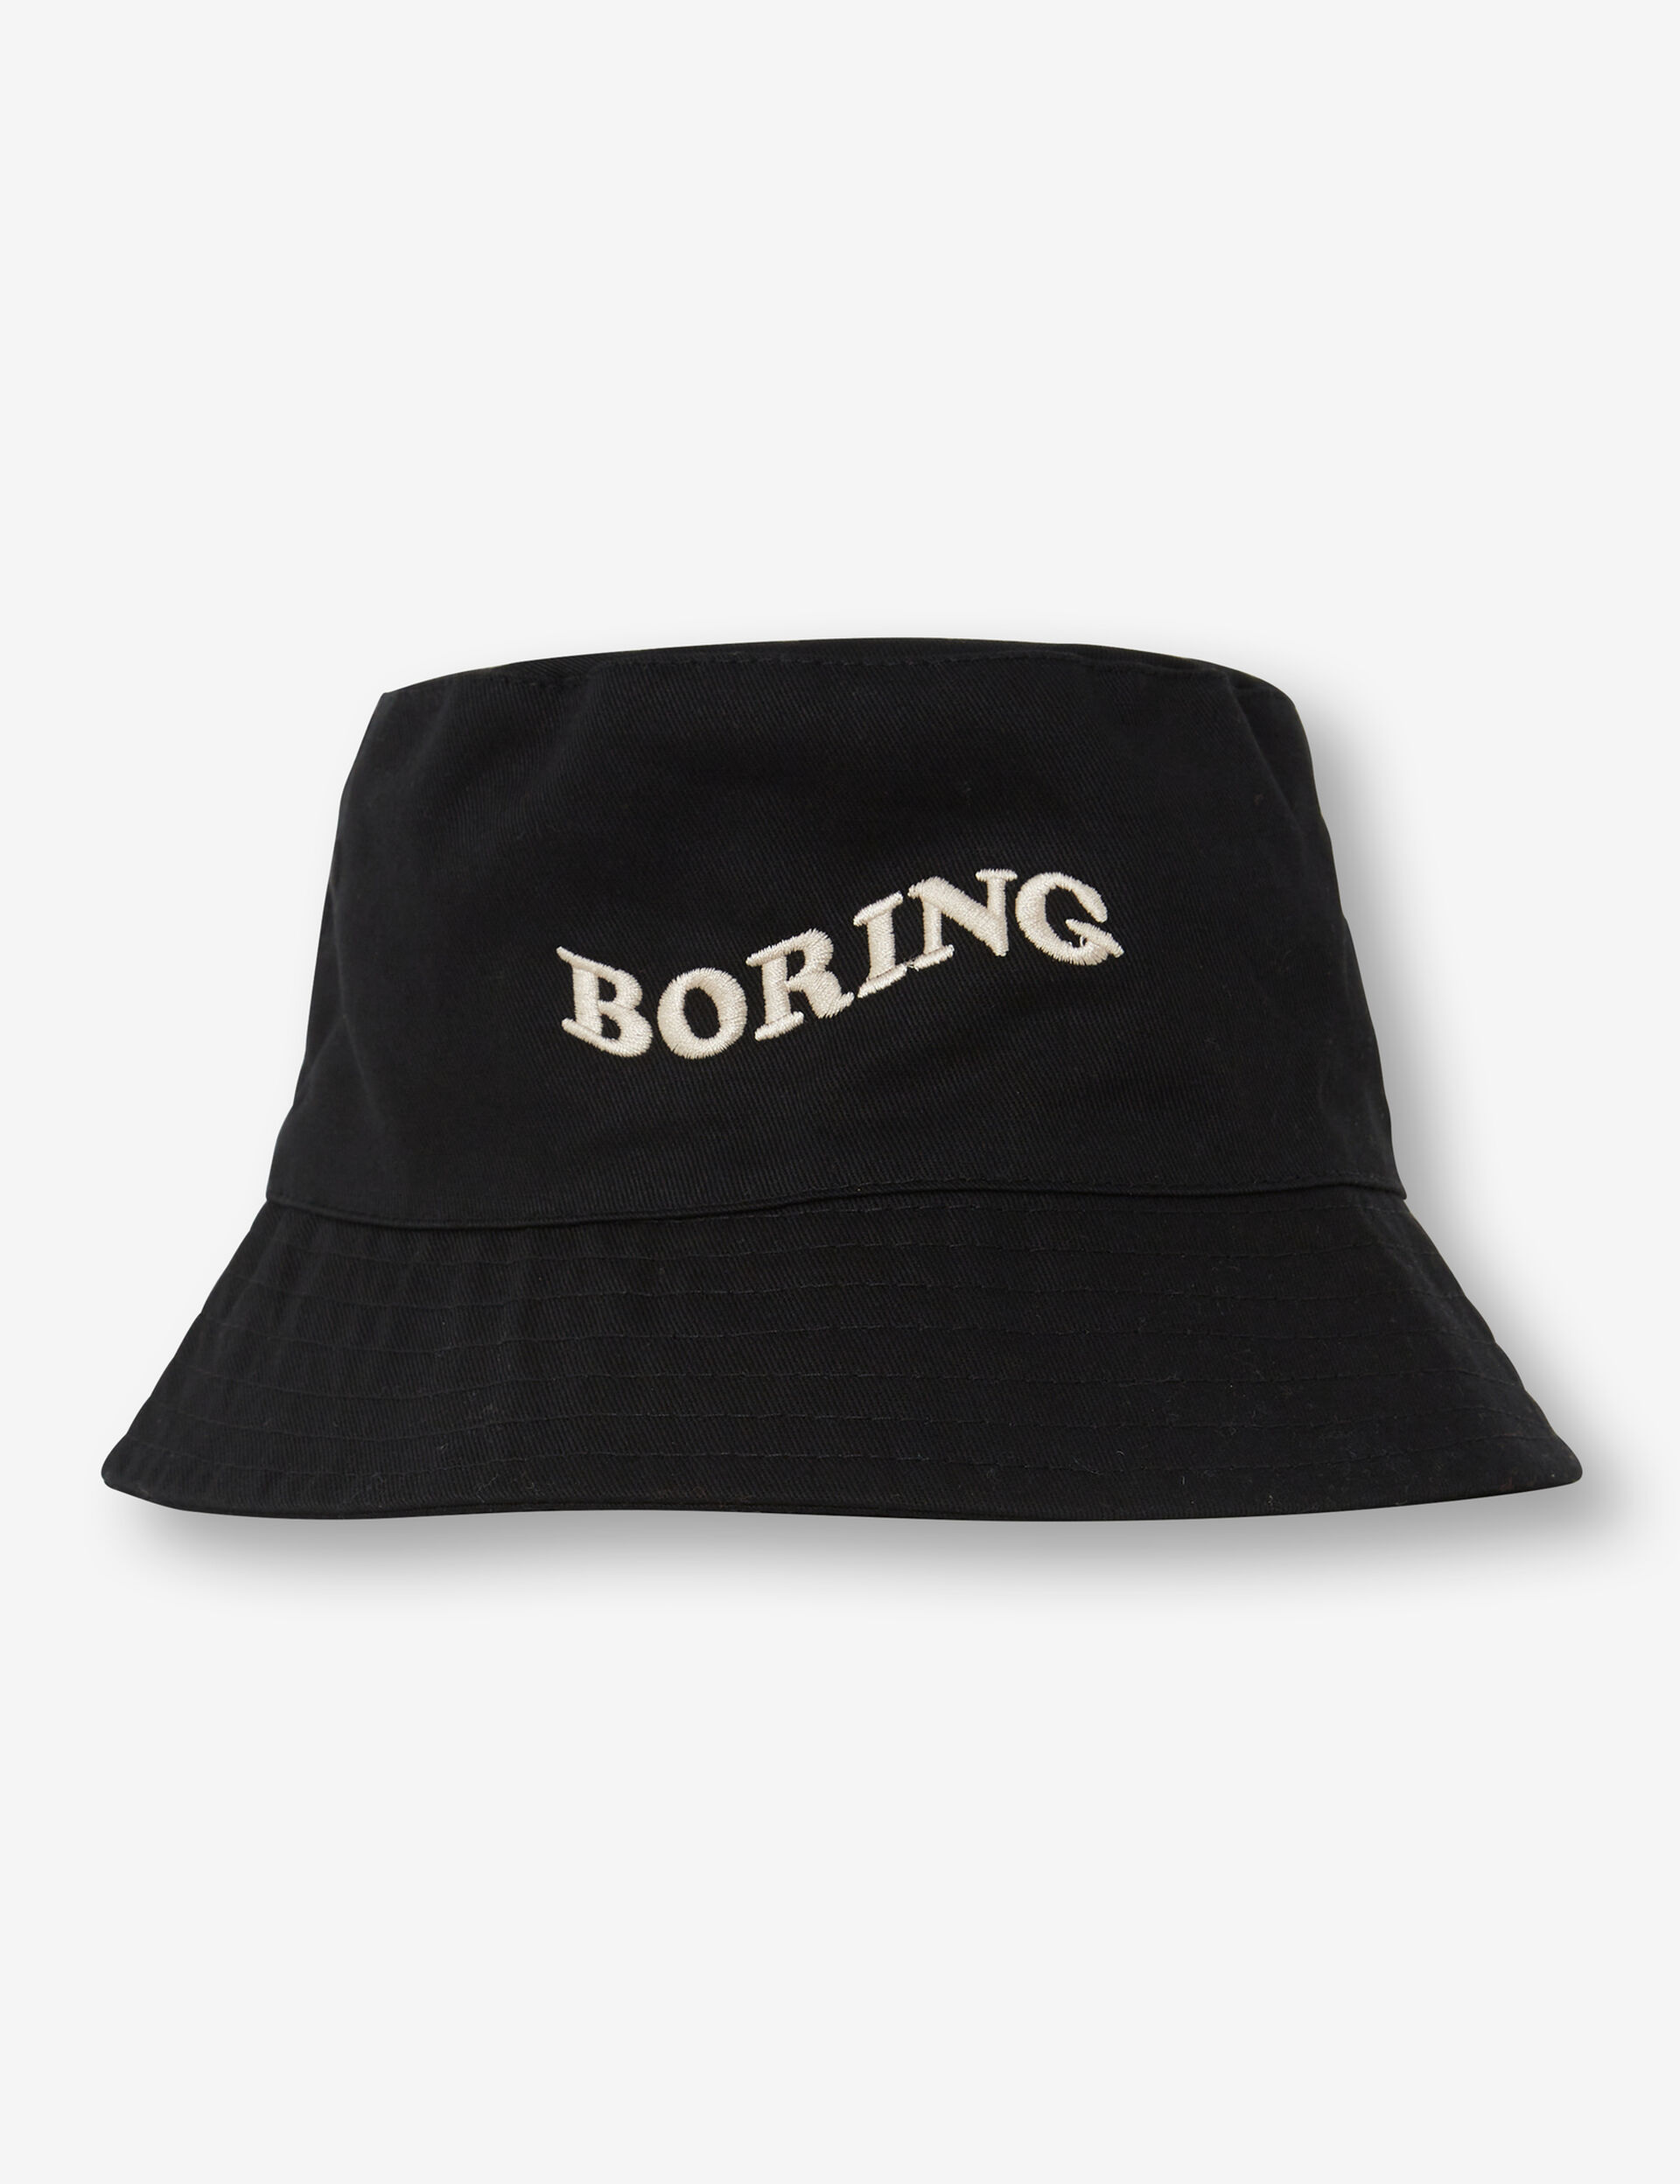 Boring bucket hat